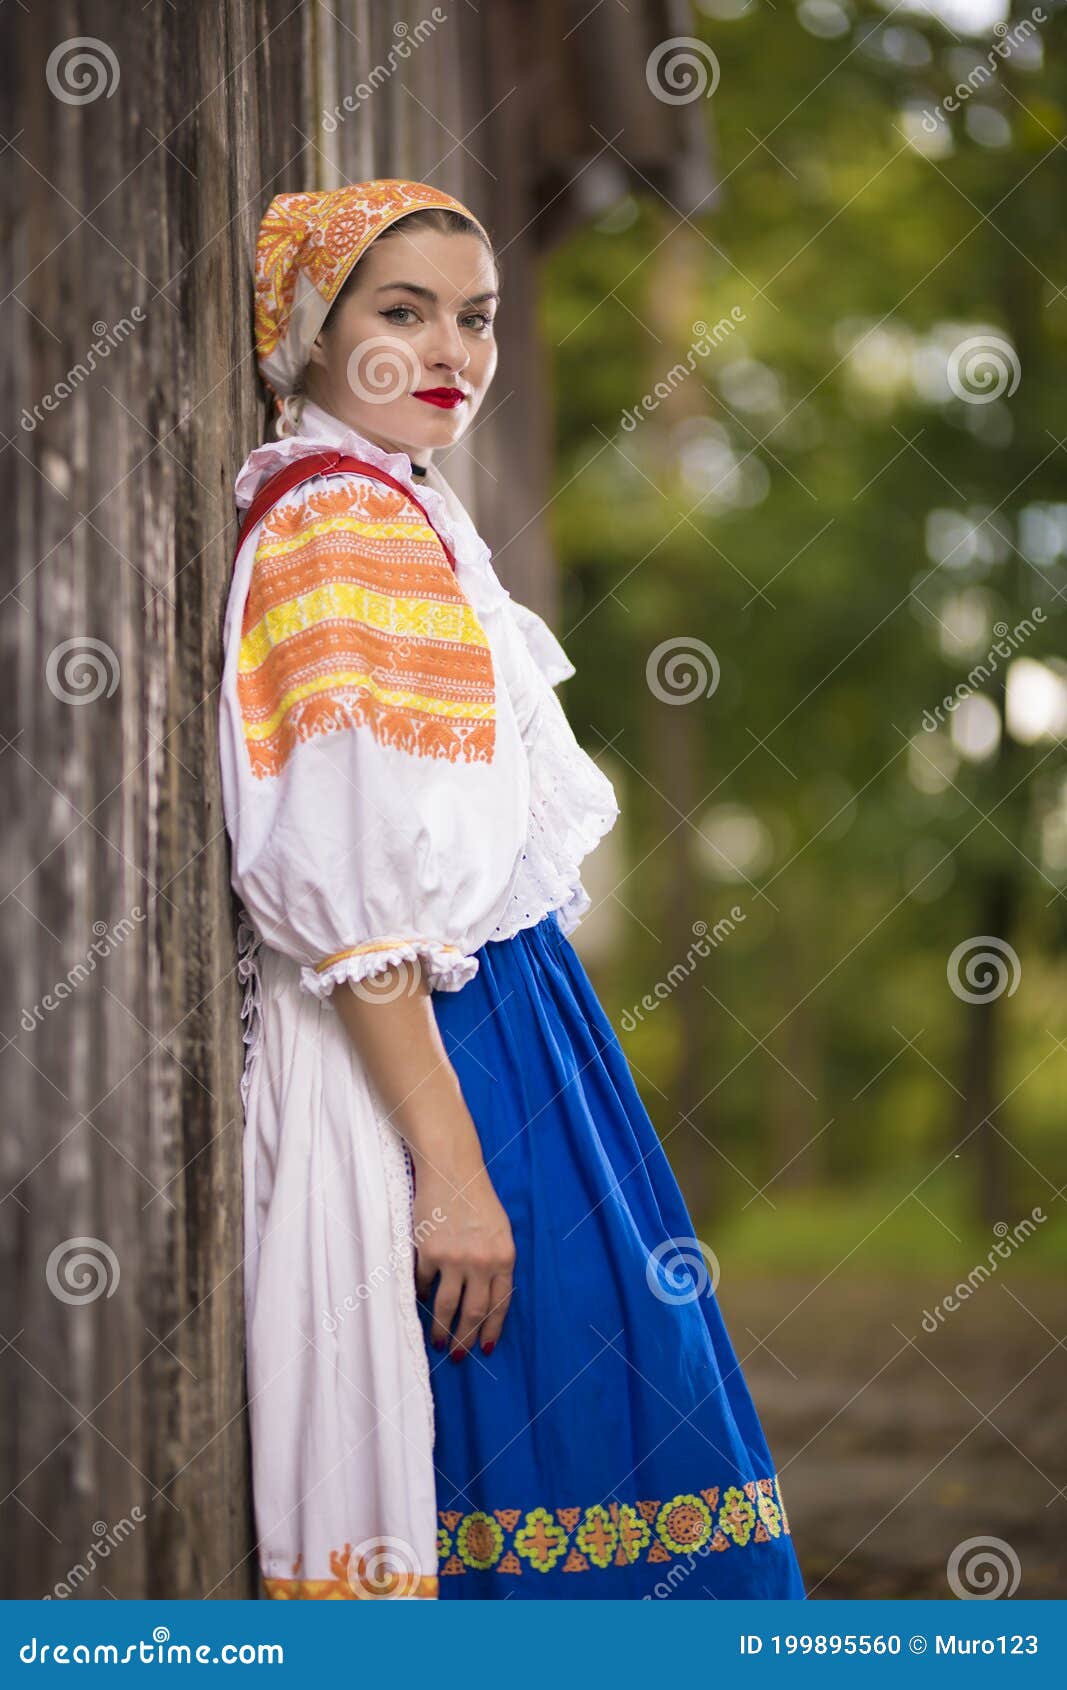 Slovak Folklore. Slovak Folklore Girl. Stock Photo - Image of caucasian ...